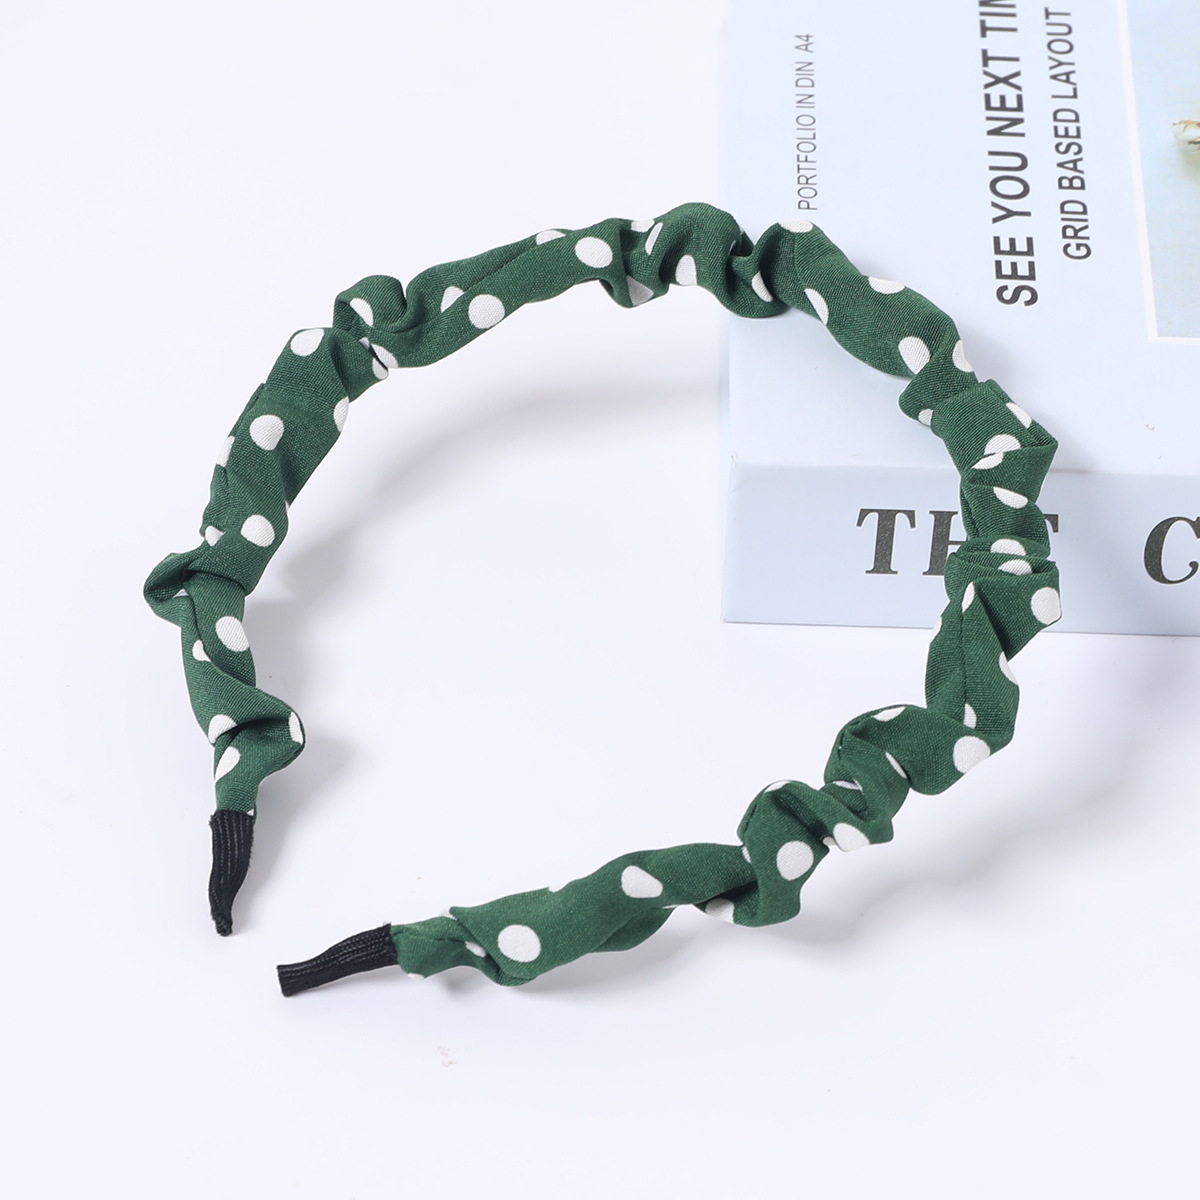 3:Green dot cloth large intestine headband